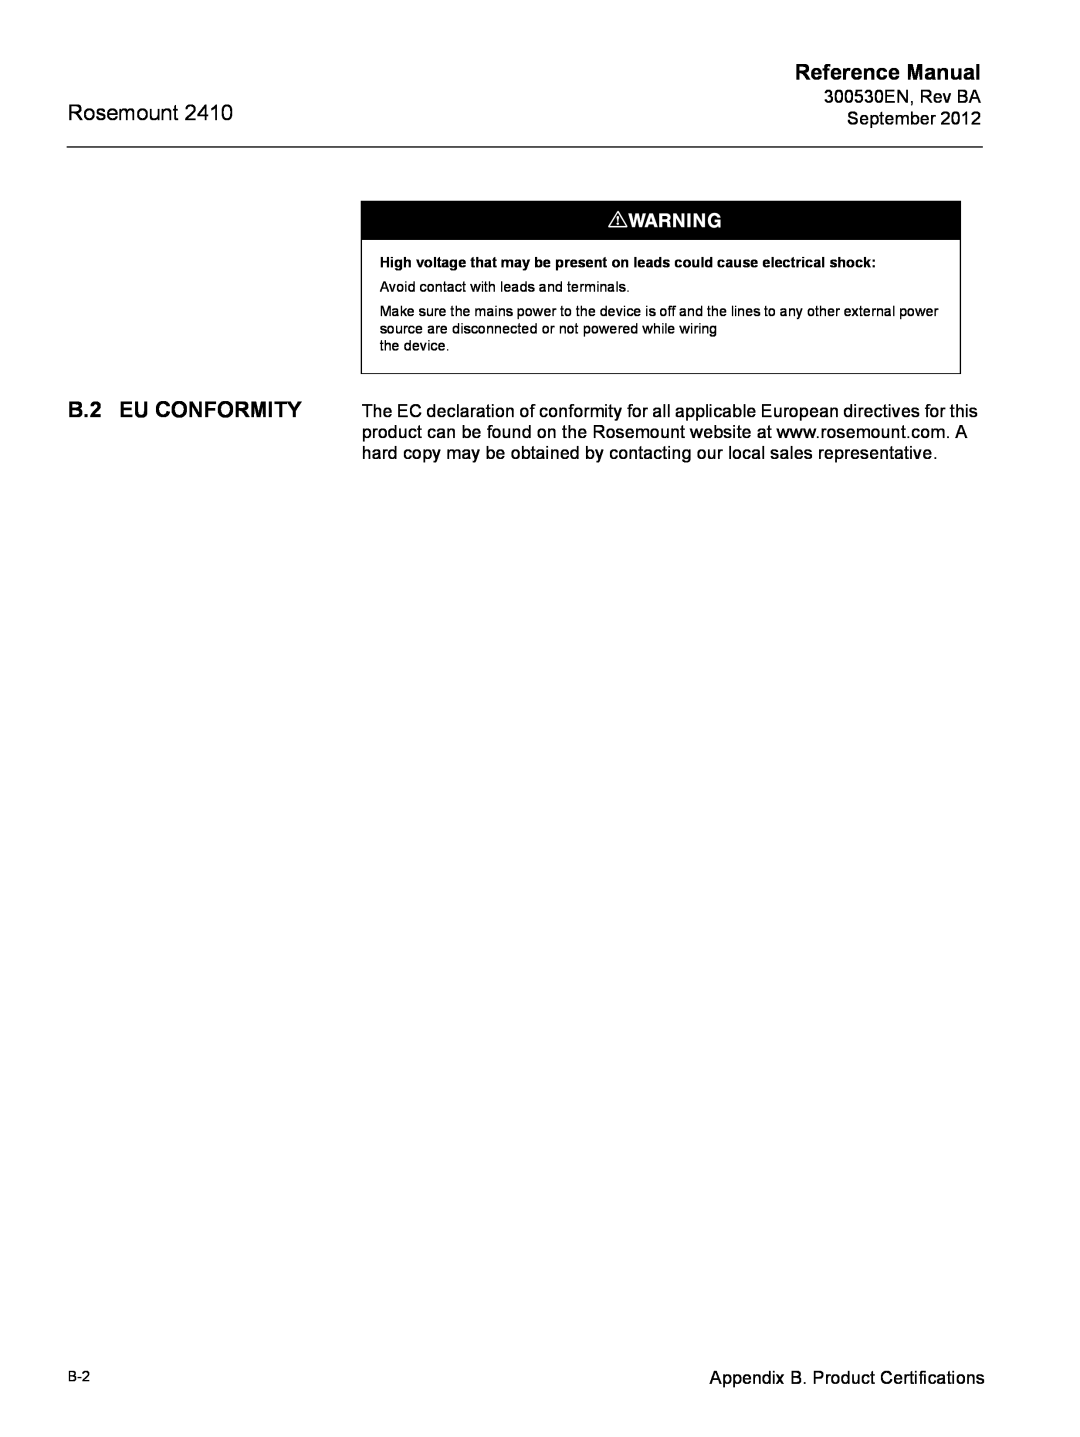 Emerson Process Management Rosemount 2410 manual B.2 EU CONFORMITY, Reference Manual 